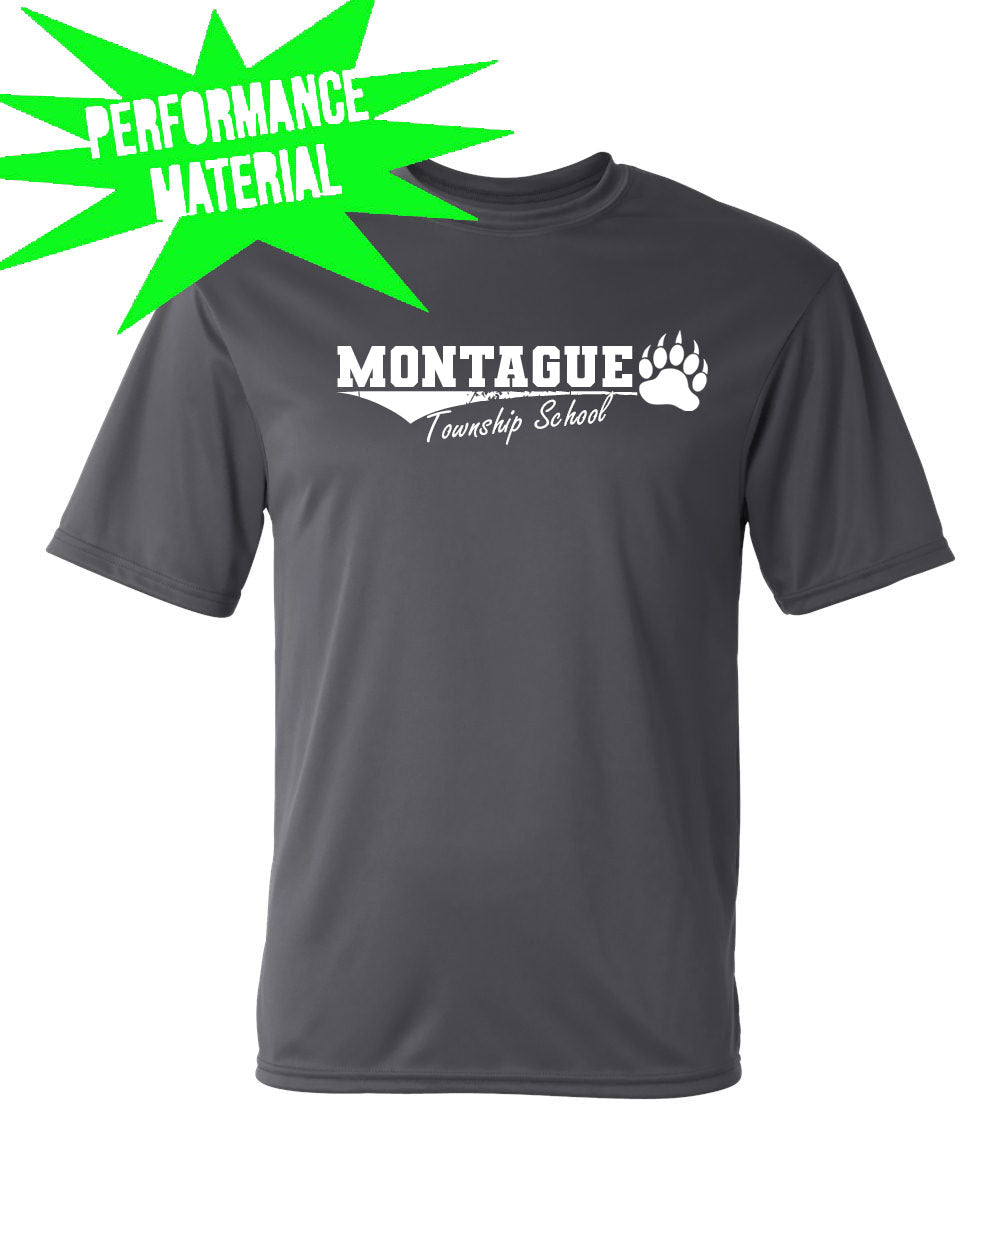 Montague Performance Material Design 1 T-Shirt